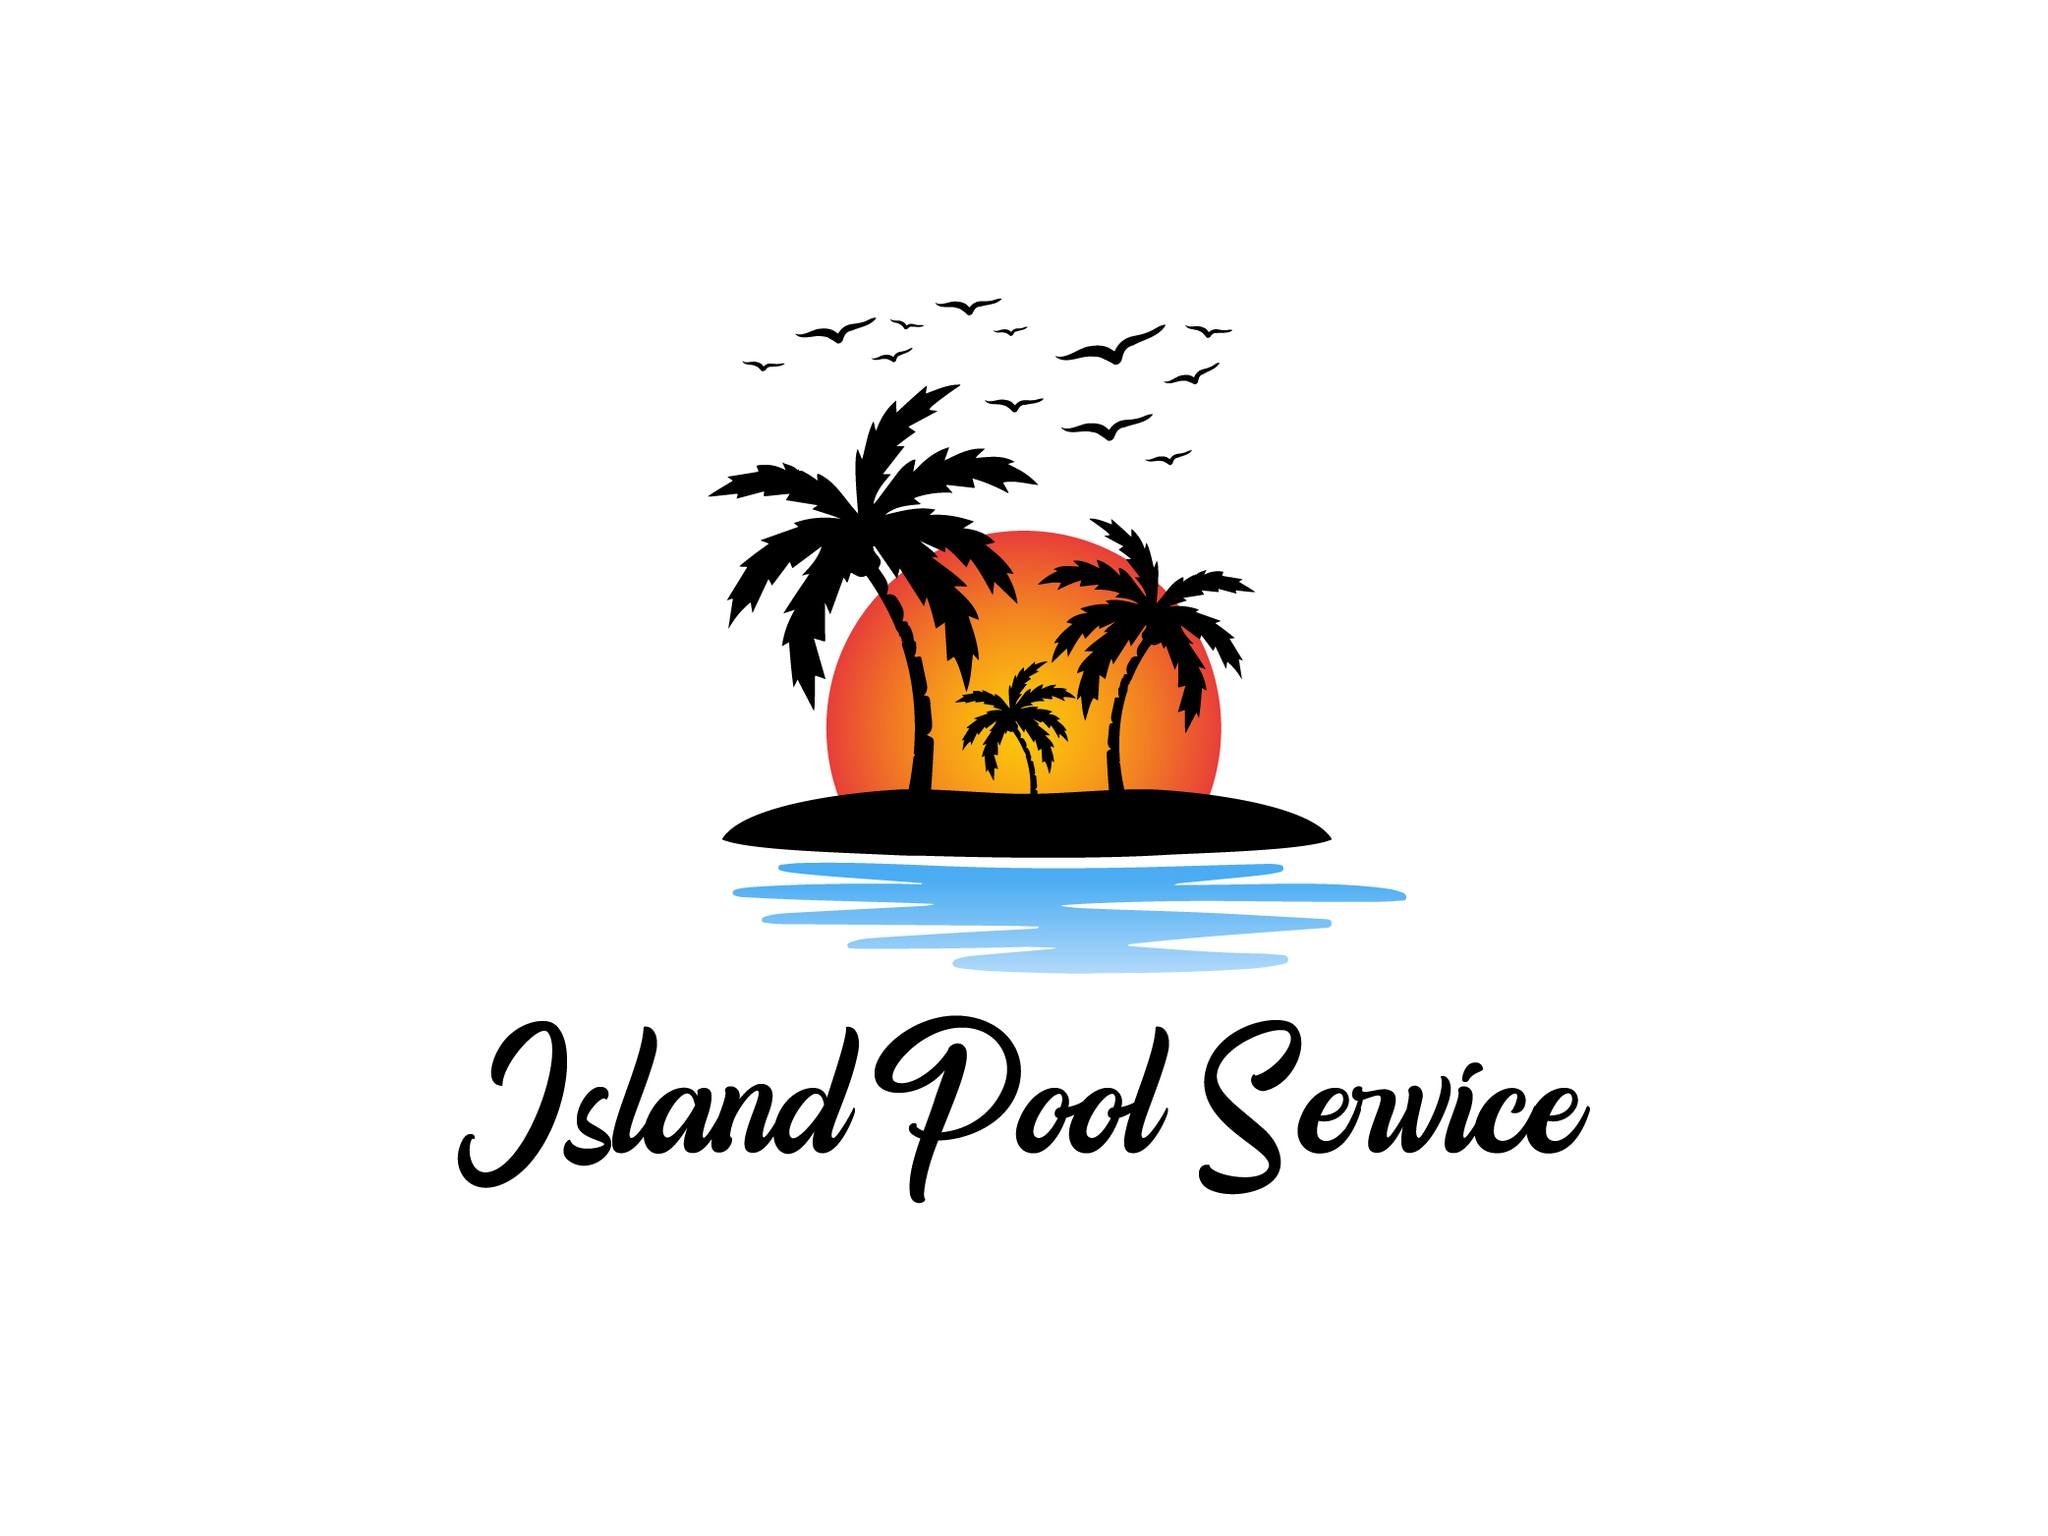 Company logo of Island Pool Service